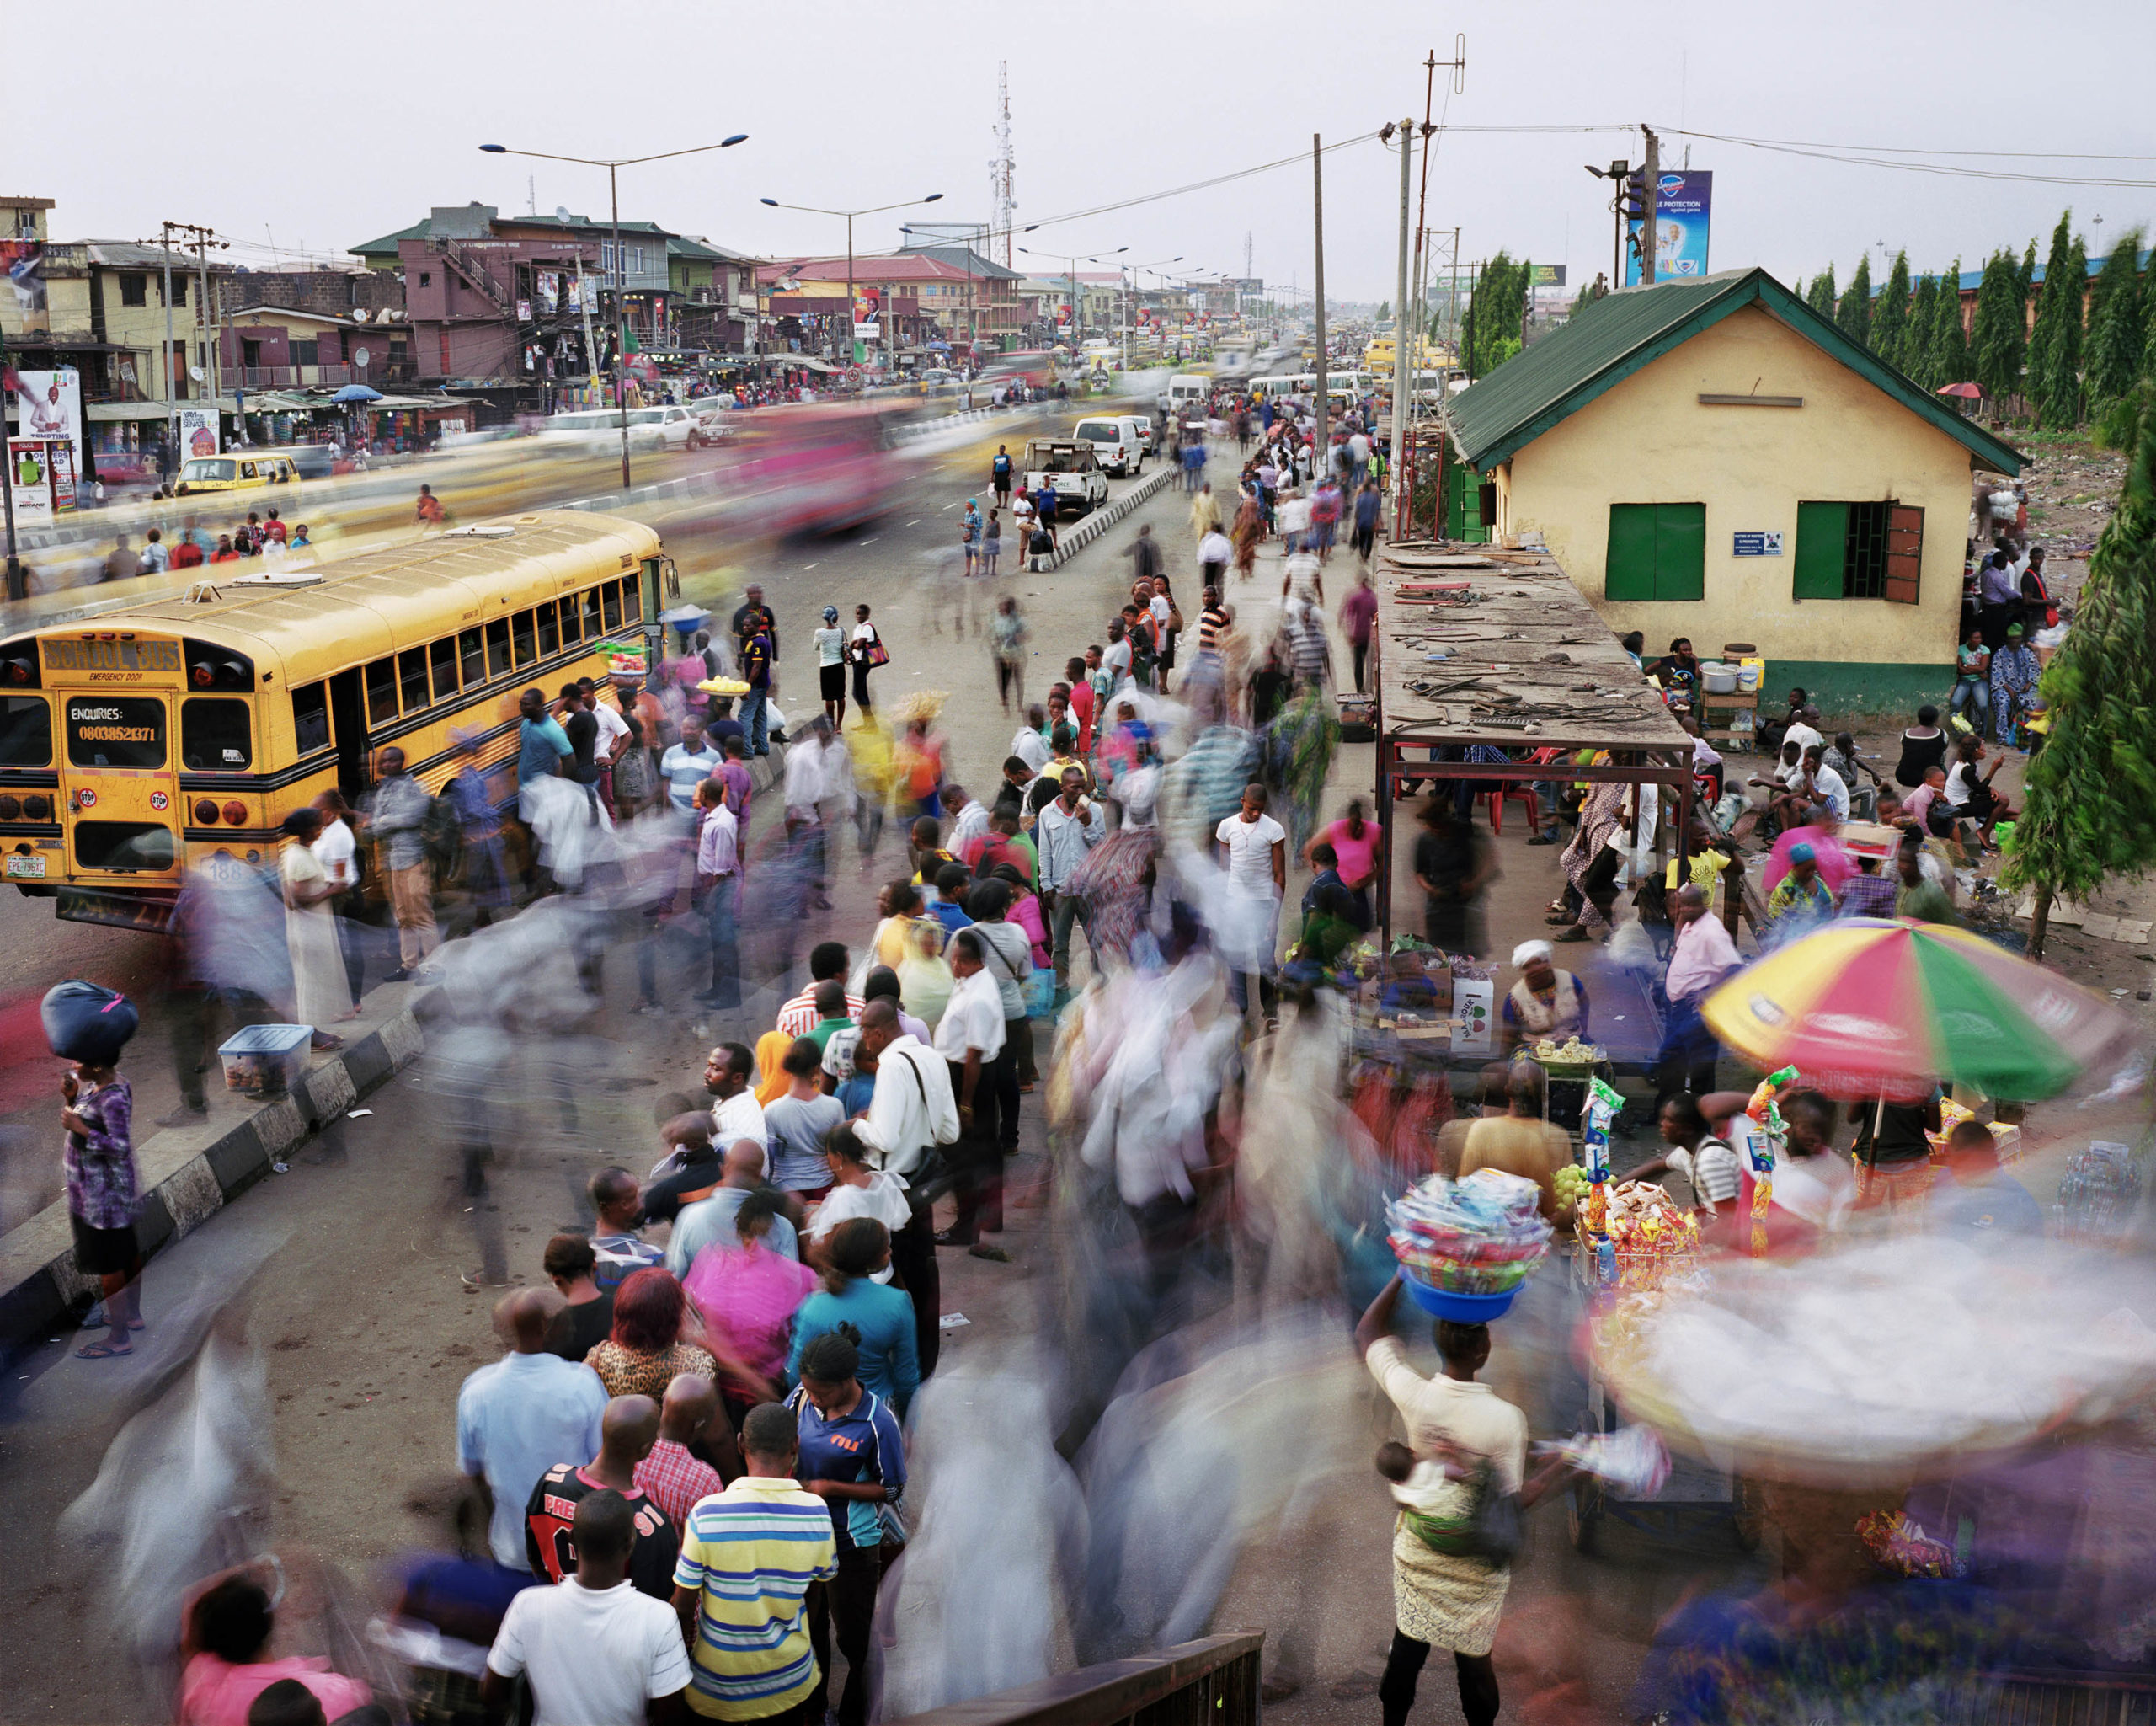 Agege Motor Road, Oshodi, Lagos, Nigeria